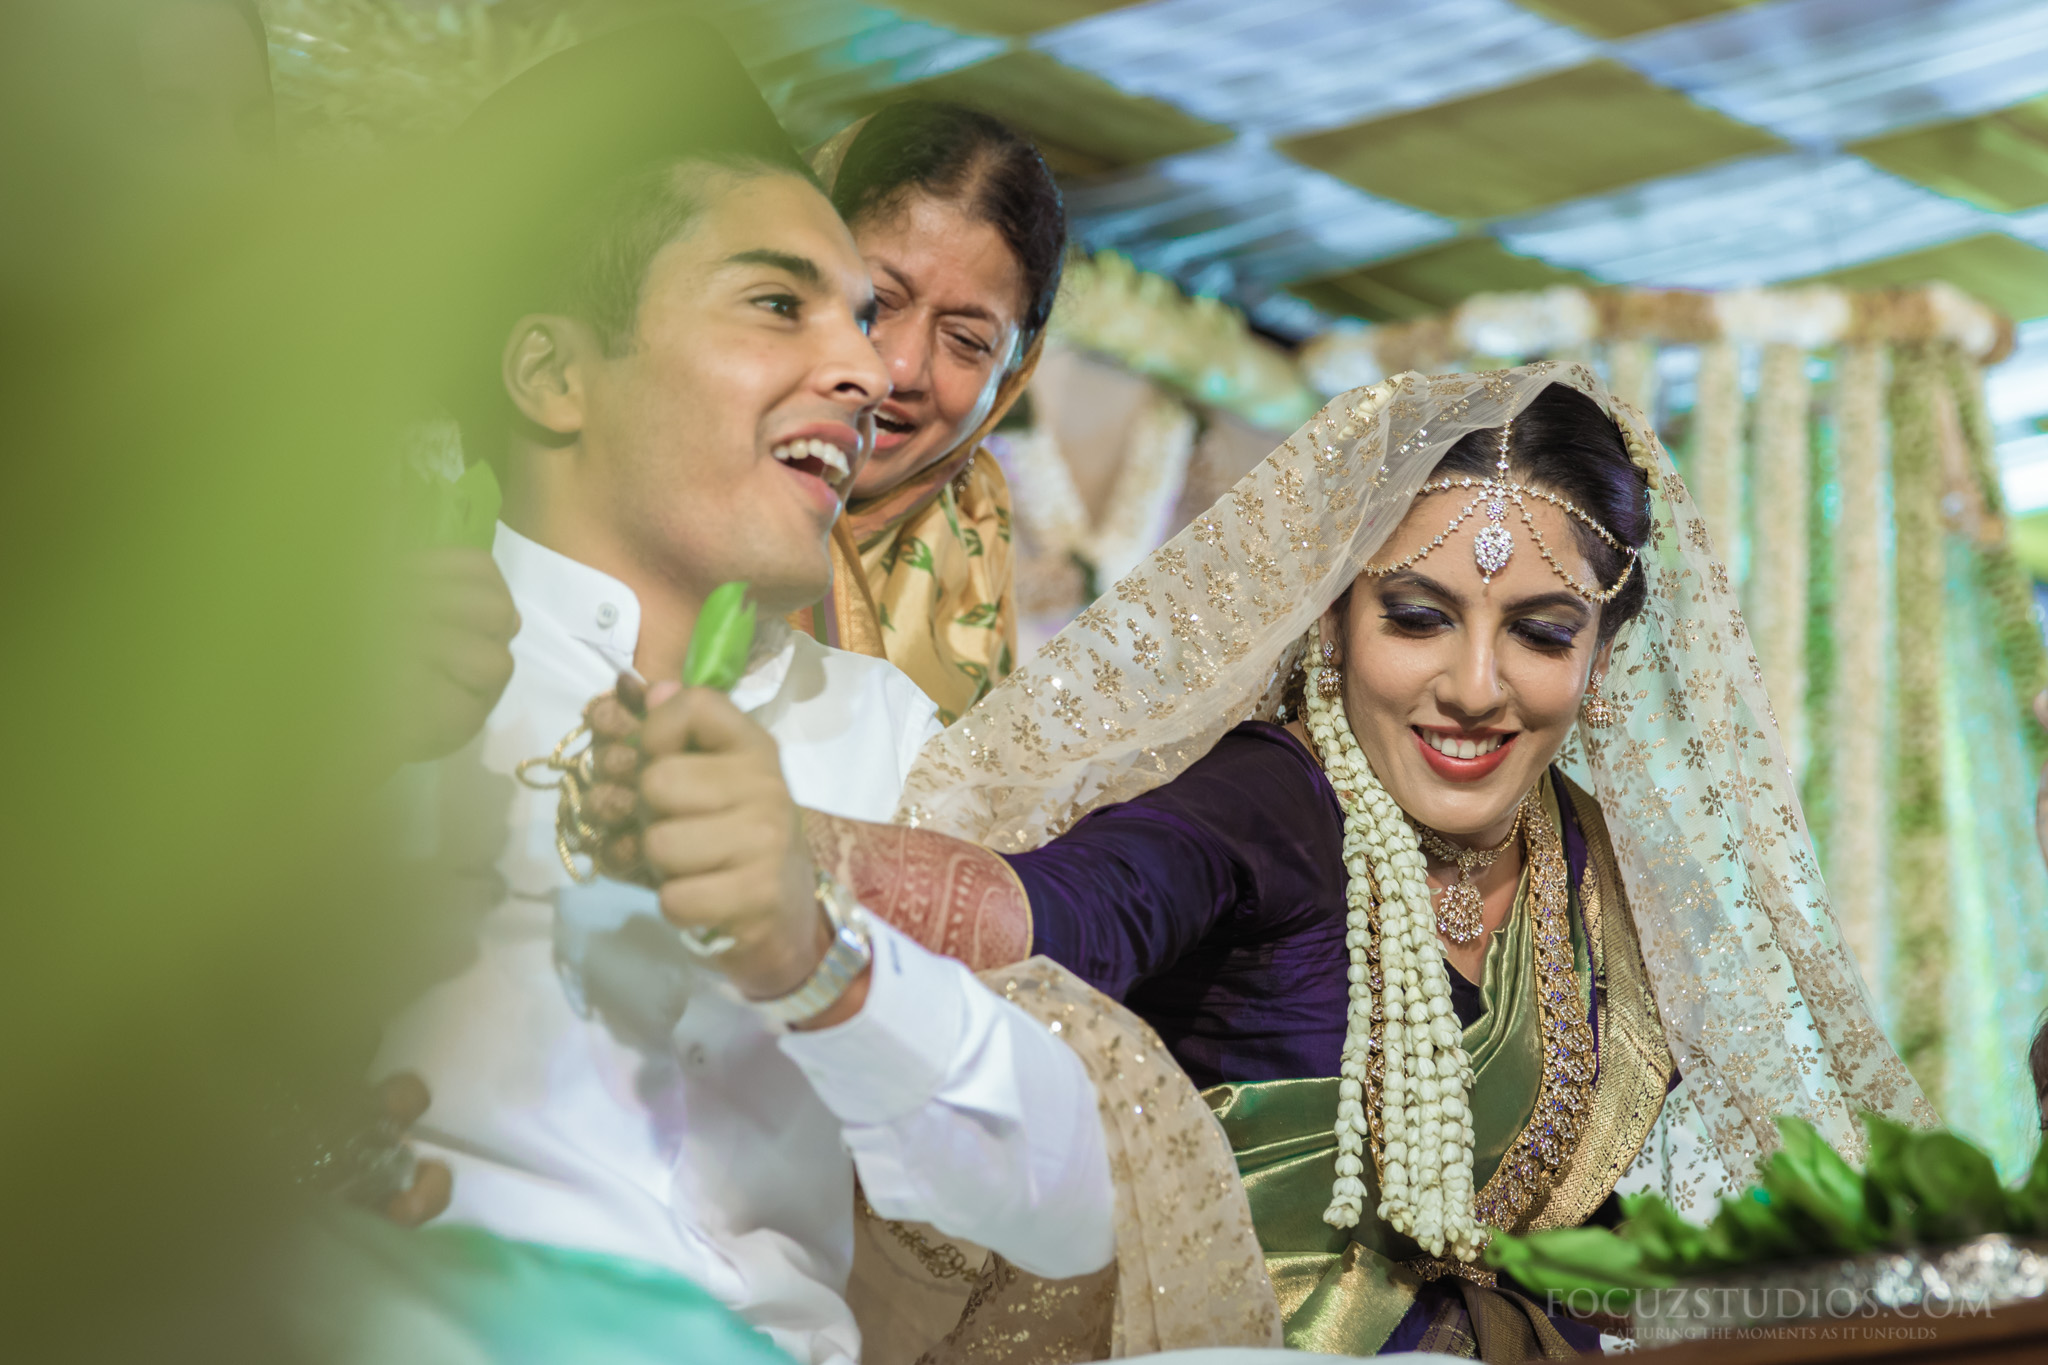 Muslim wedding rituals couple exchanging ring or gifts 5